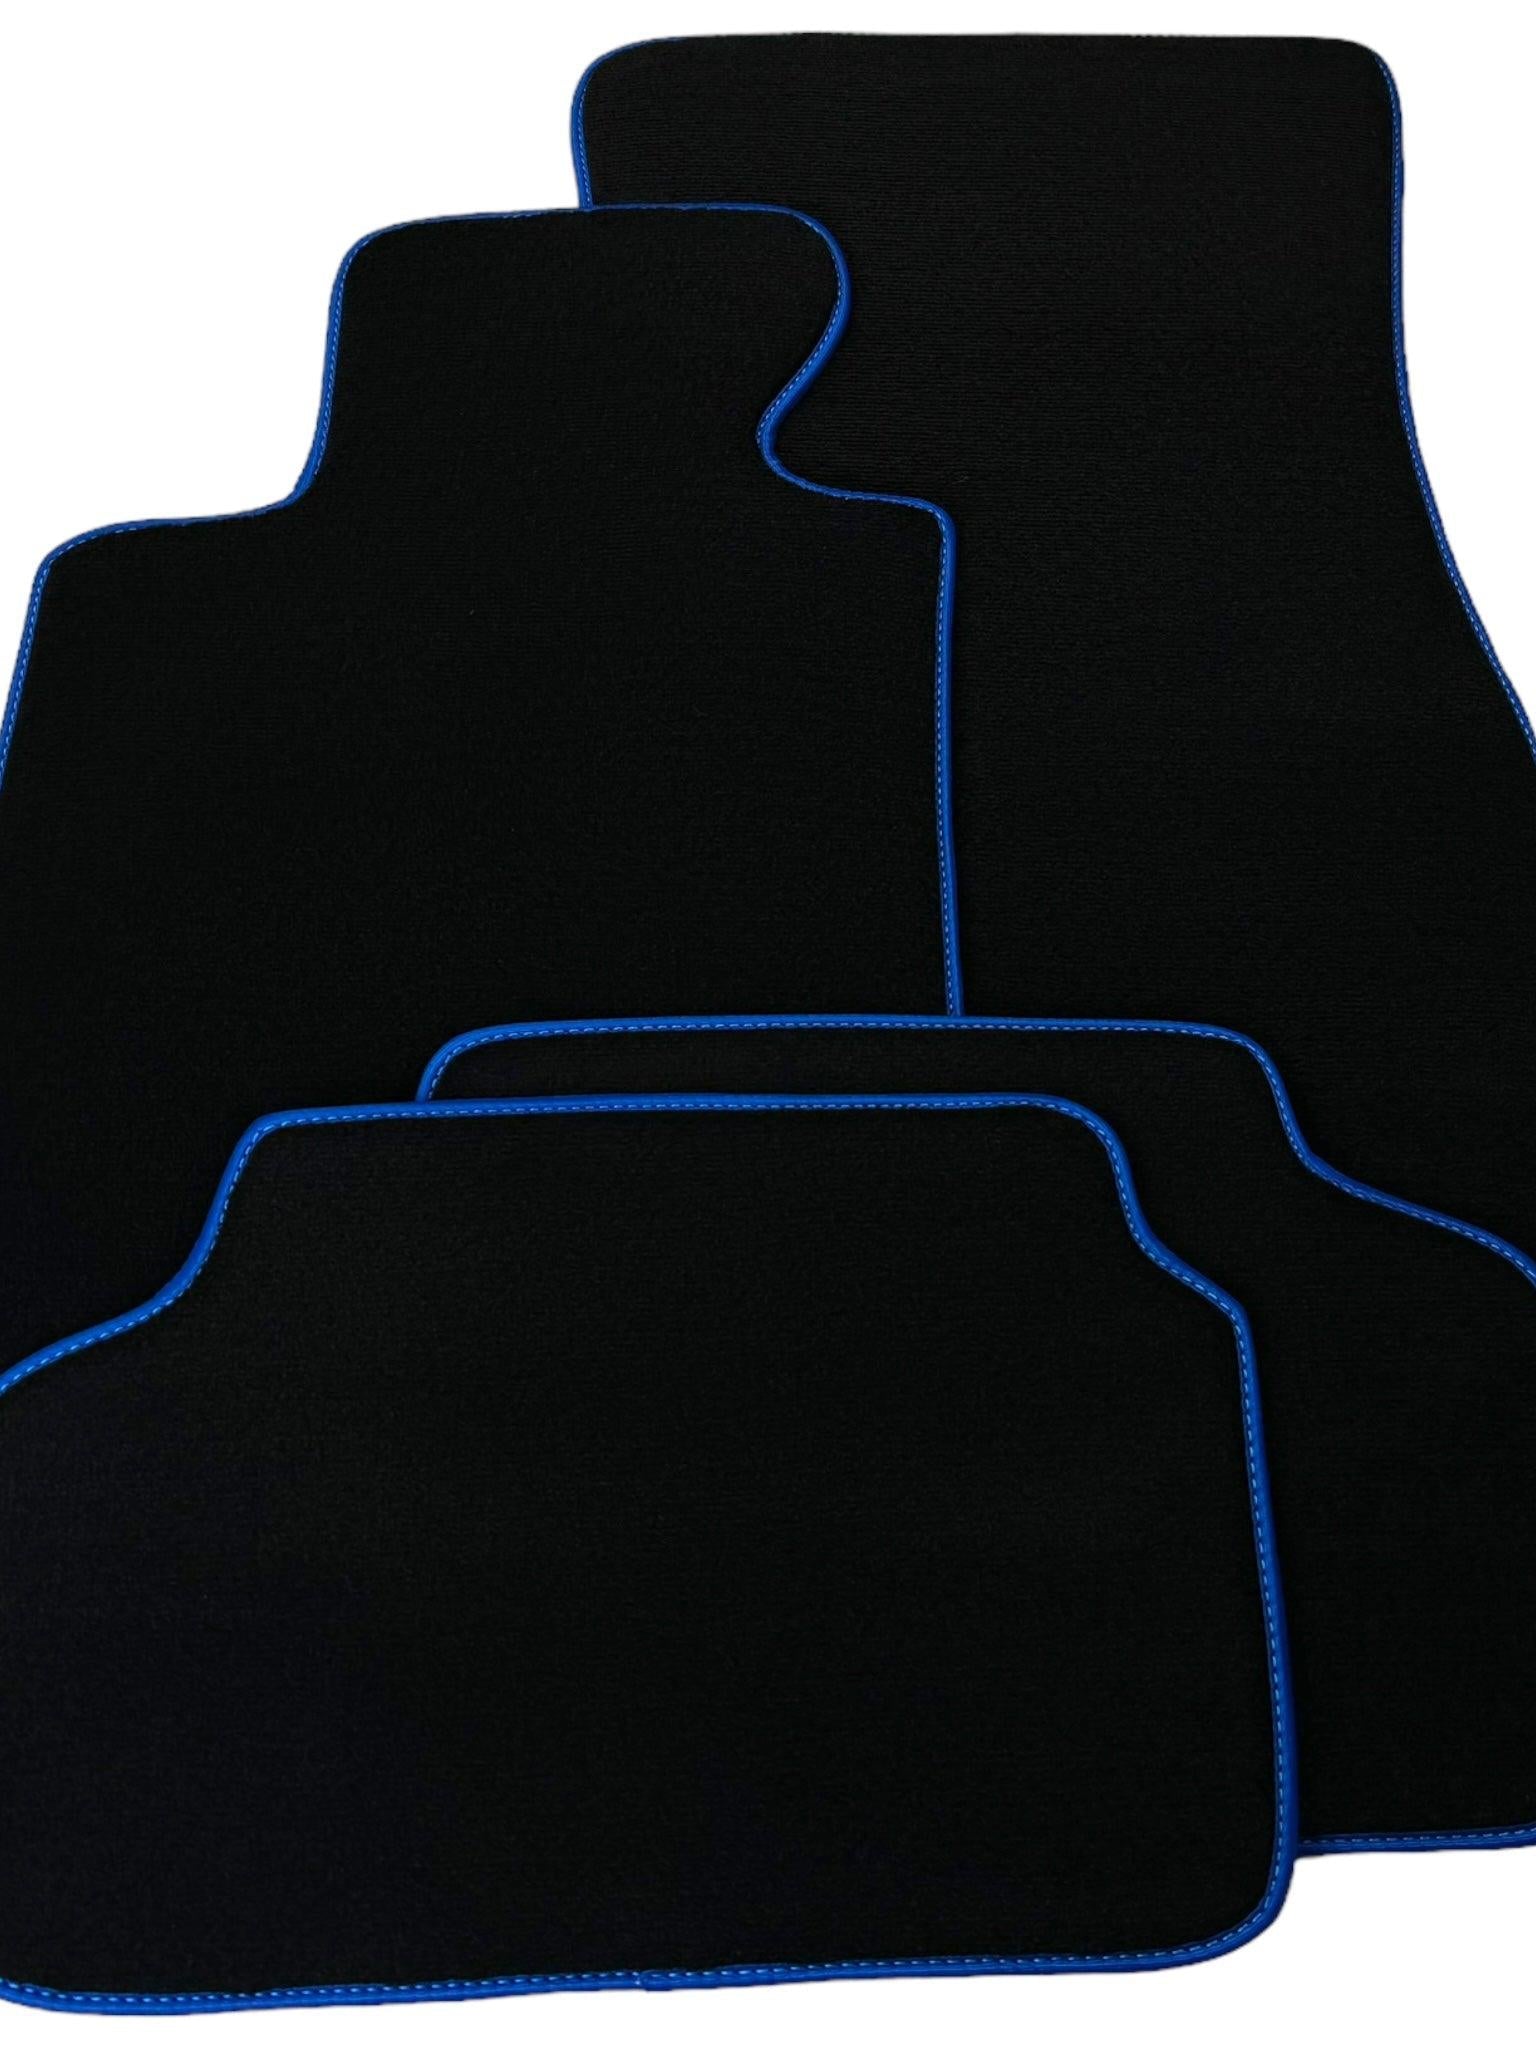 Black Floor Floor Mats For BMW 5 Series E60 | Blue Trim